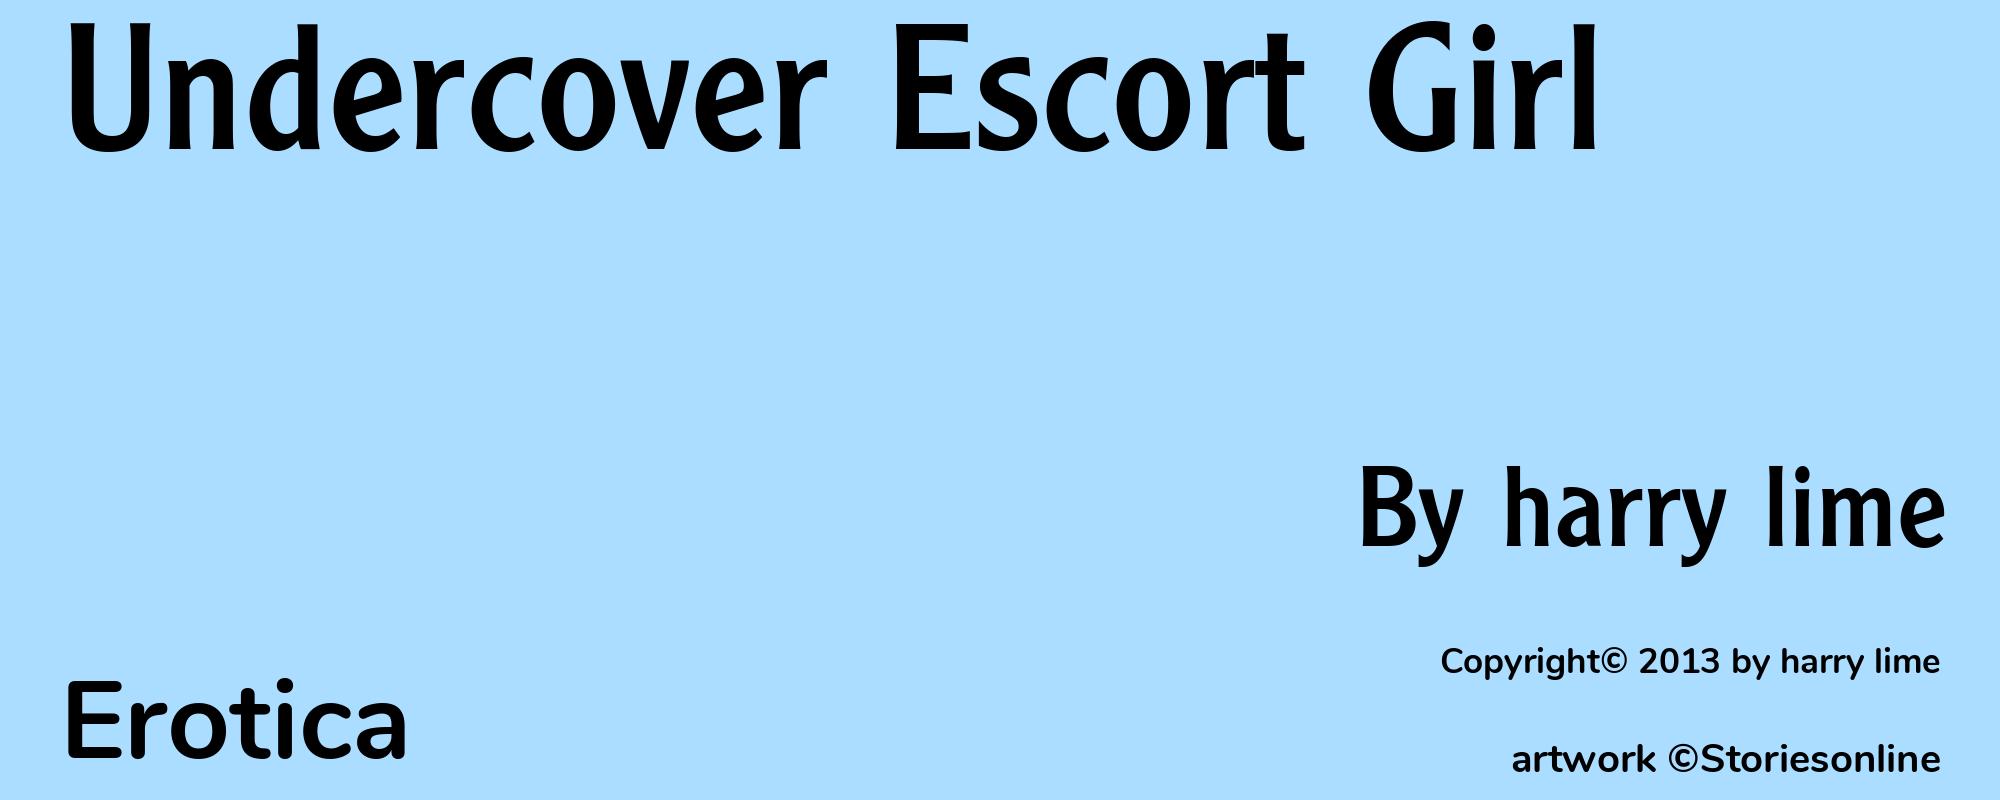 Undercover Escort Girl - Cover